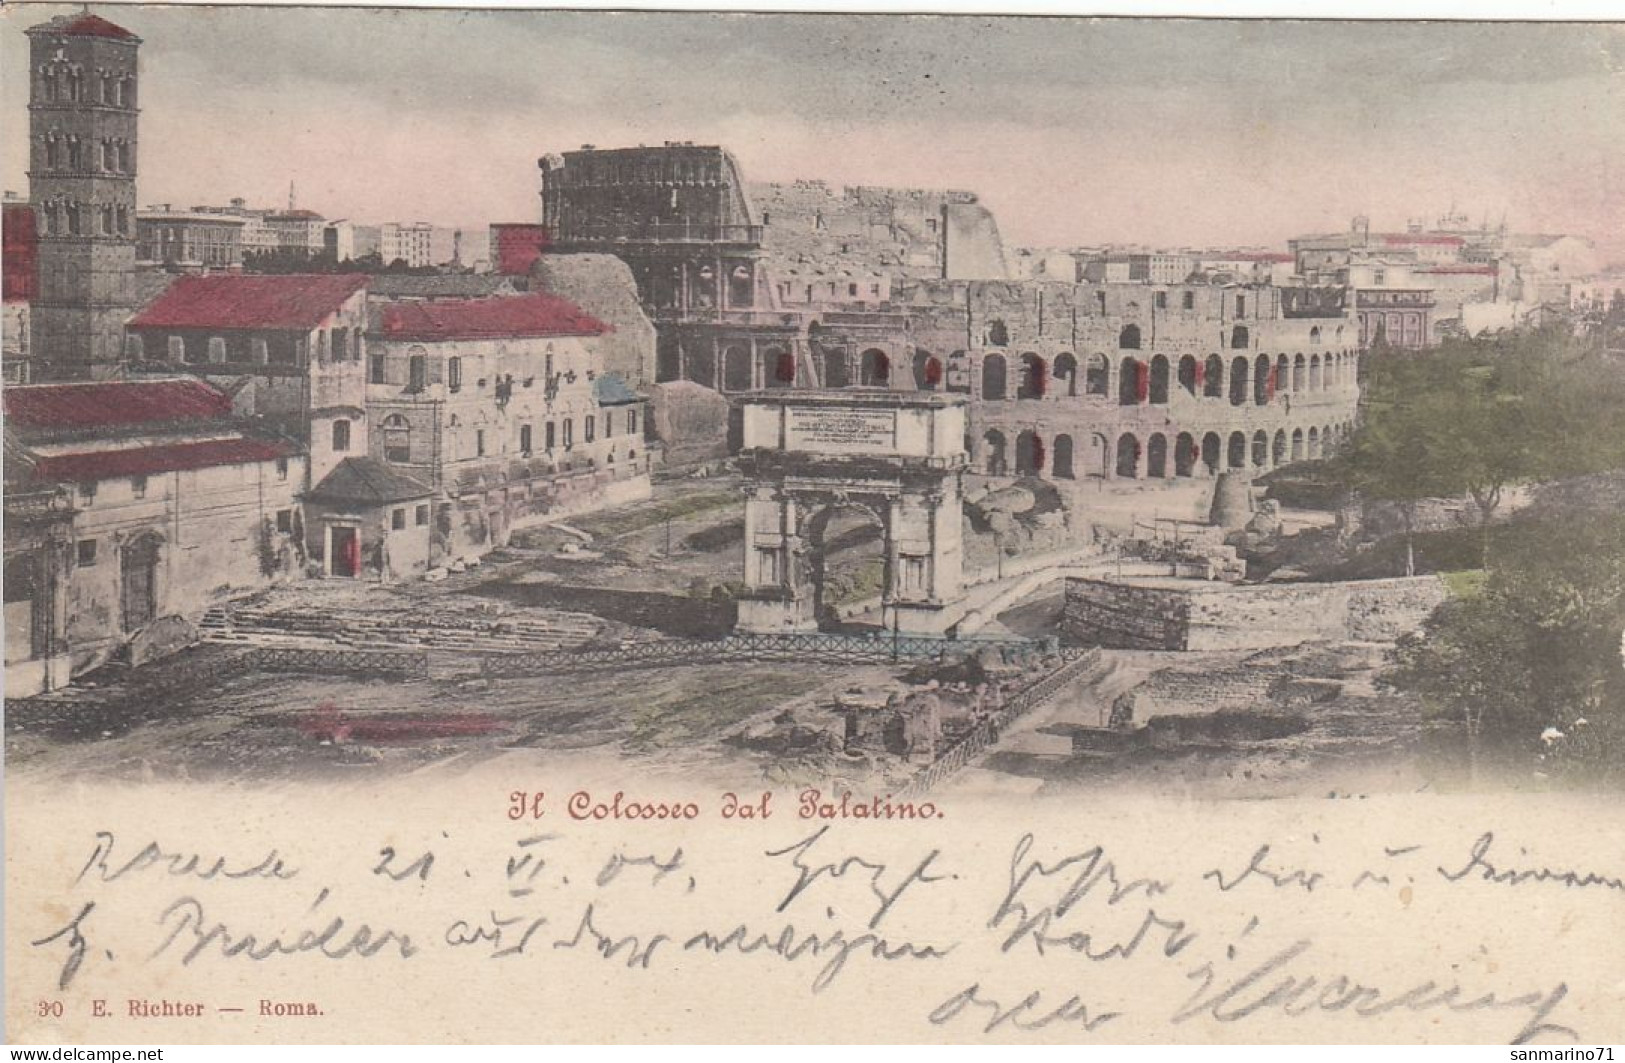 POSTCARD 1882,Italy,Roma - Colosseum